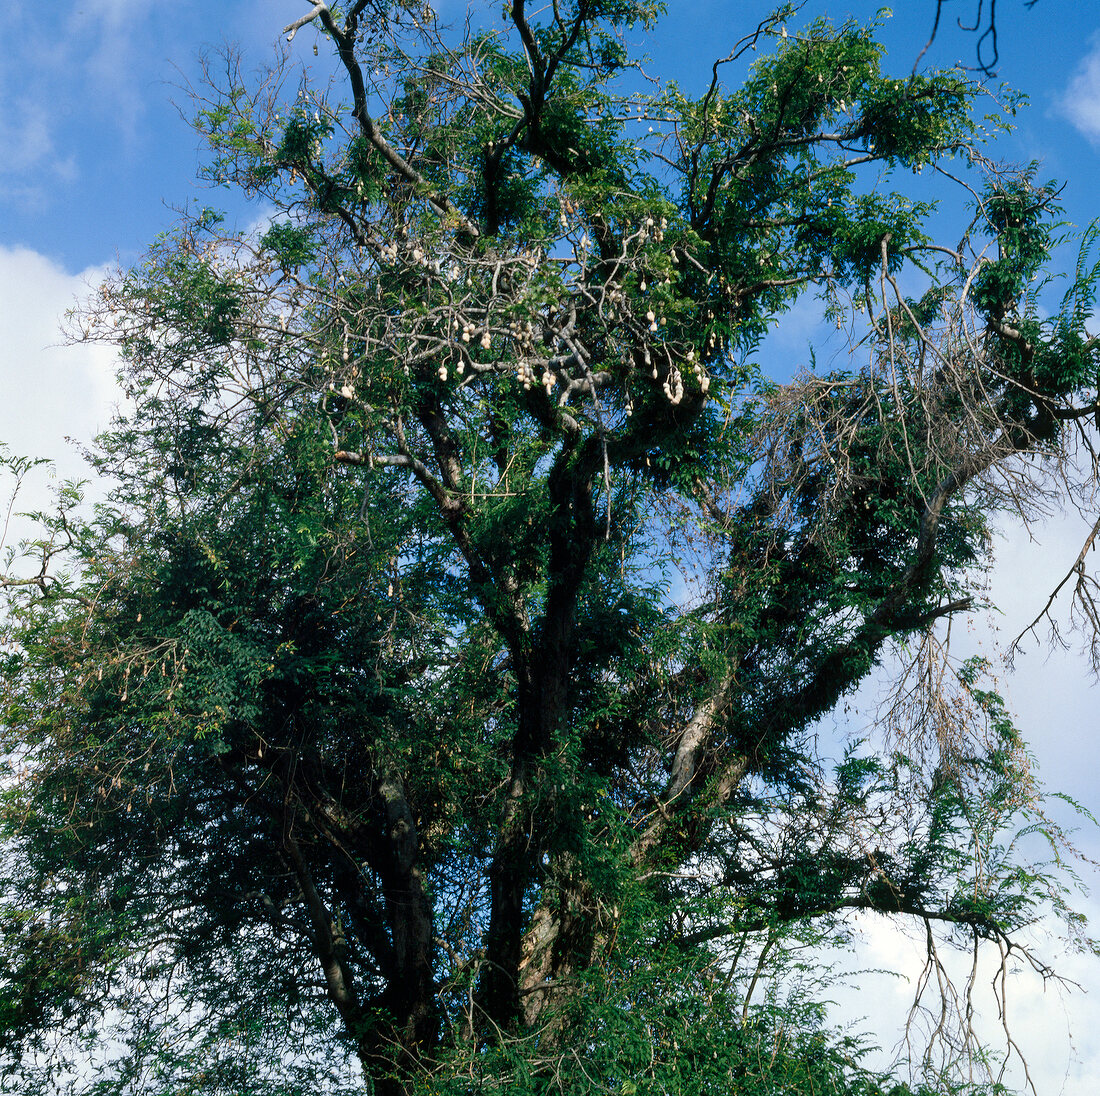 View of tamarind tree